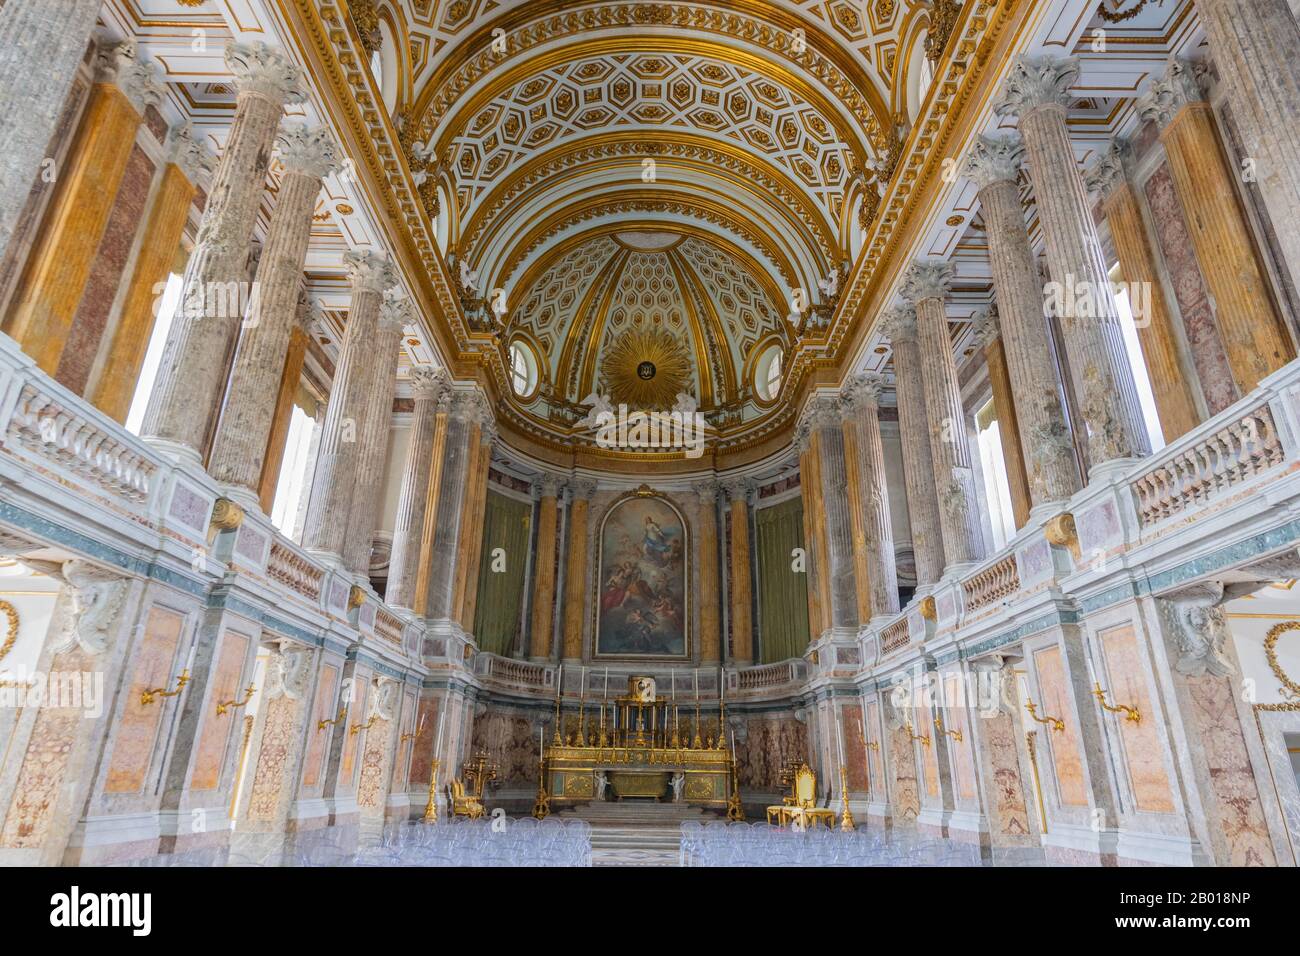 The Royal Palatine Chapel of the Bourbon Kings of Naples Royal Palace of Caserta, Italy. Stock Photo